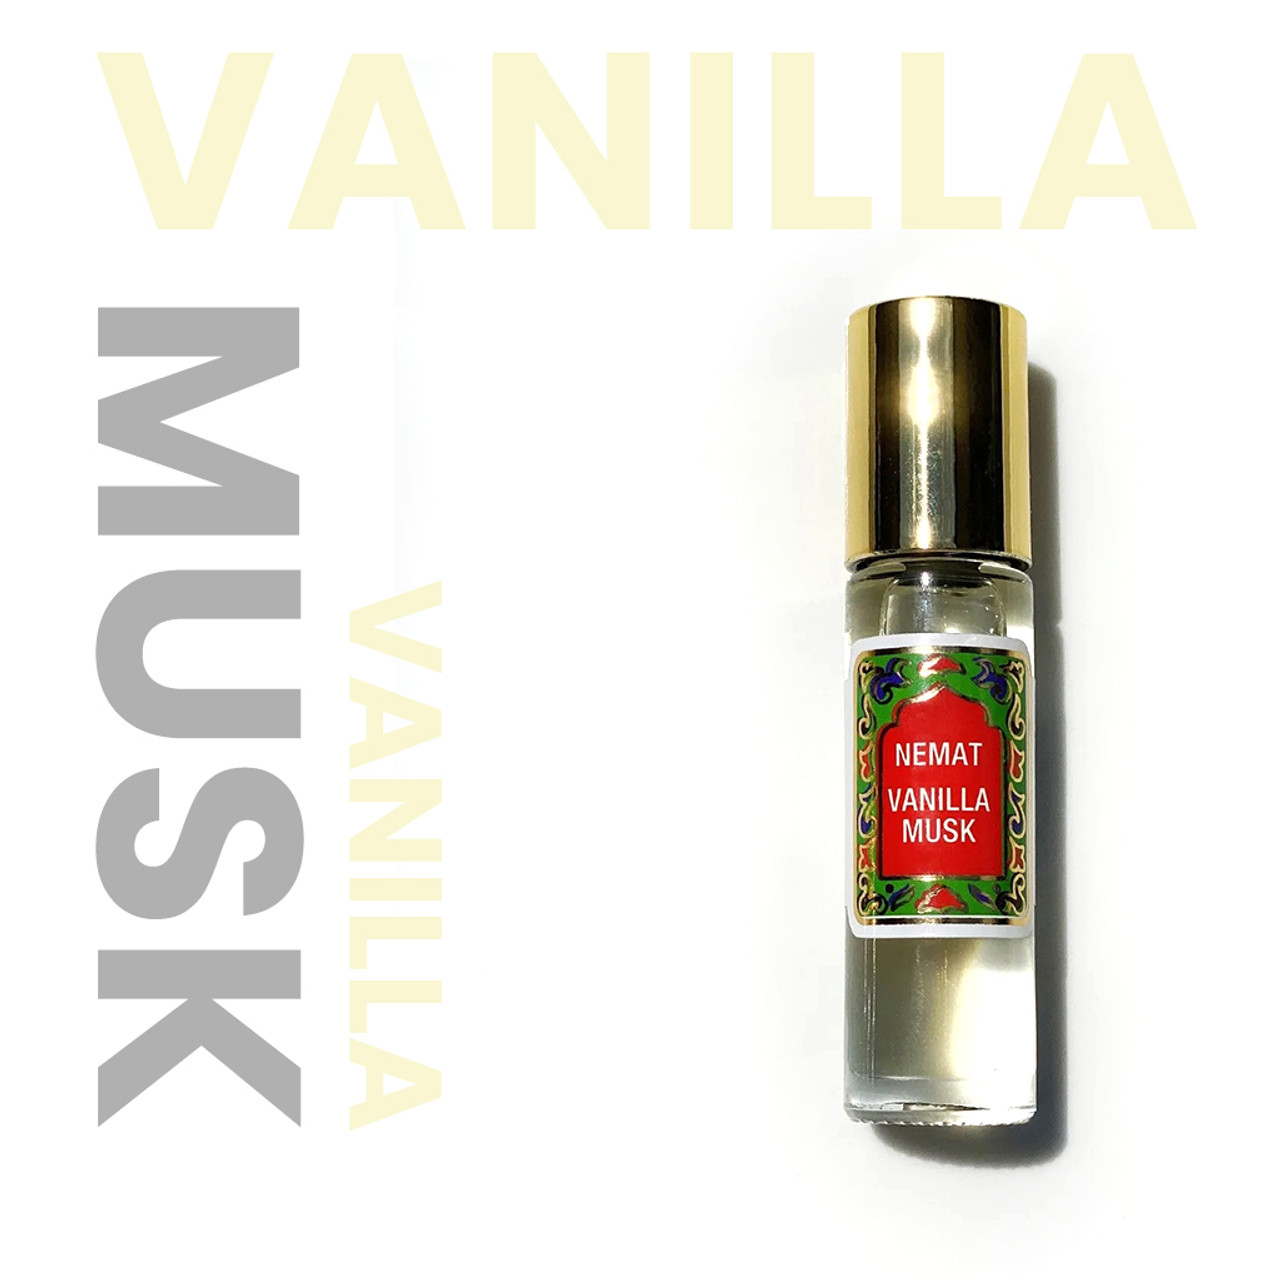 Vegan Oil Nemat Vanilla Musk Fragrance Roll-On 10ml Alcohol free